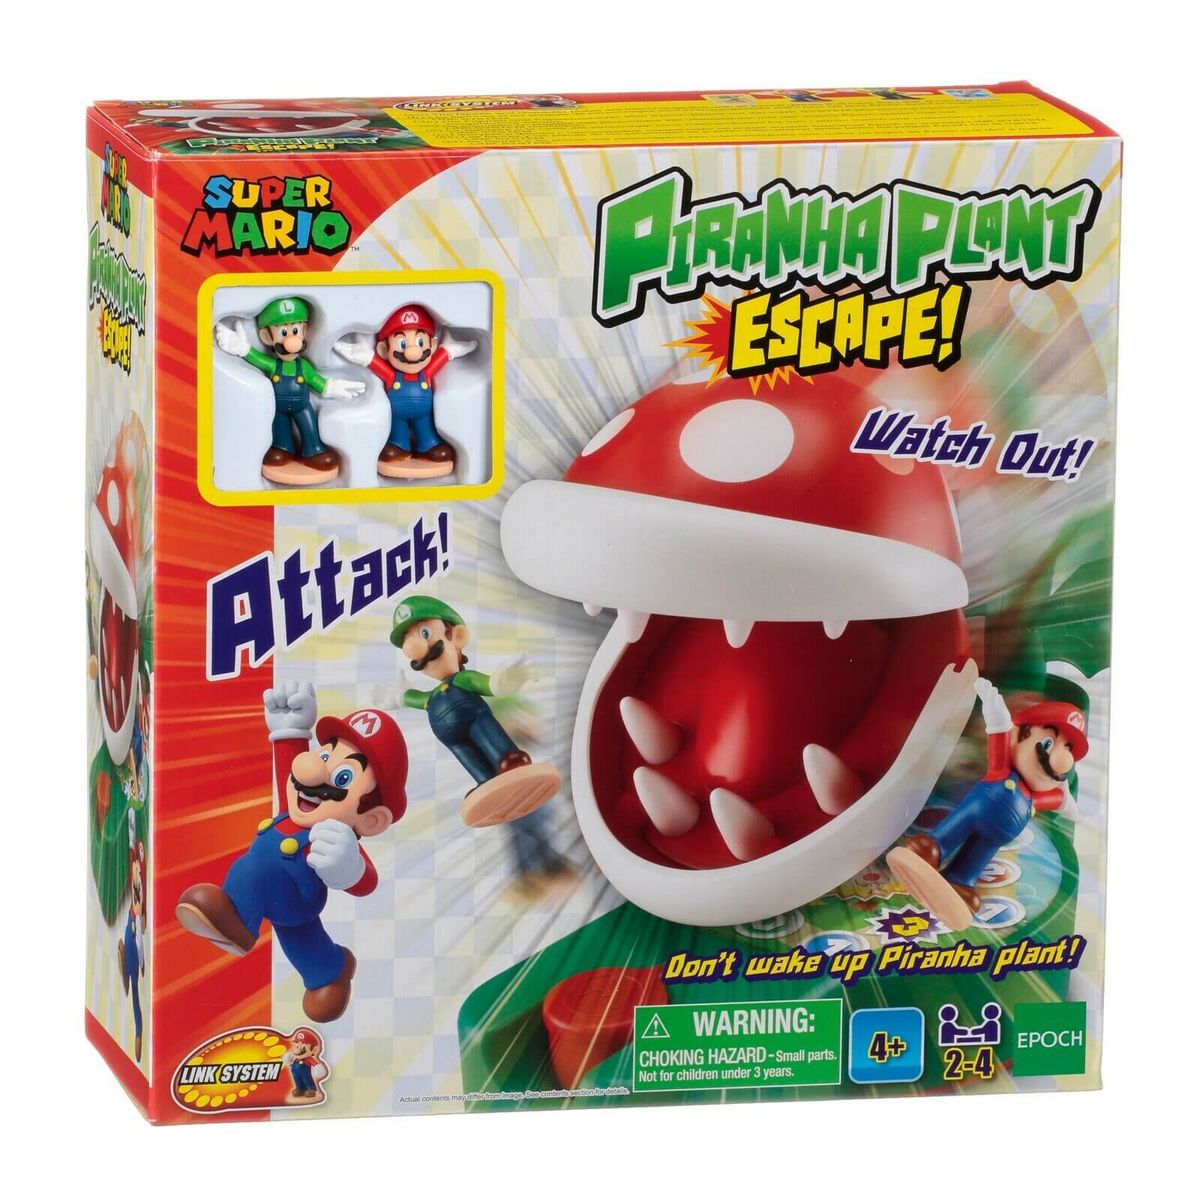 Epoch d'Enfance Jeu Super Mario - Piranha Plant Escape!